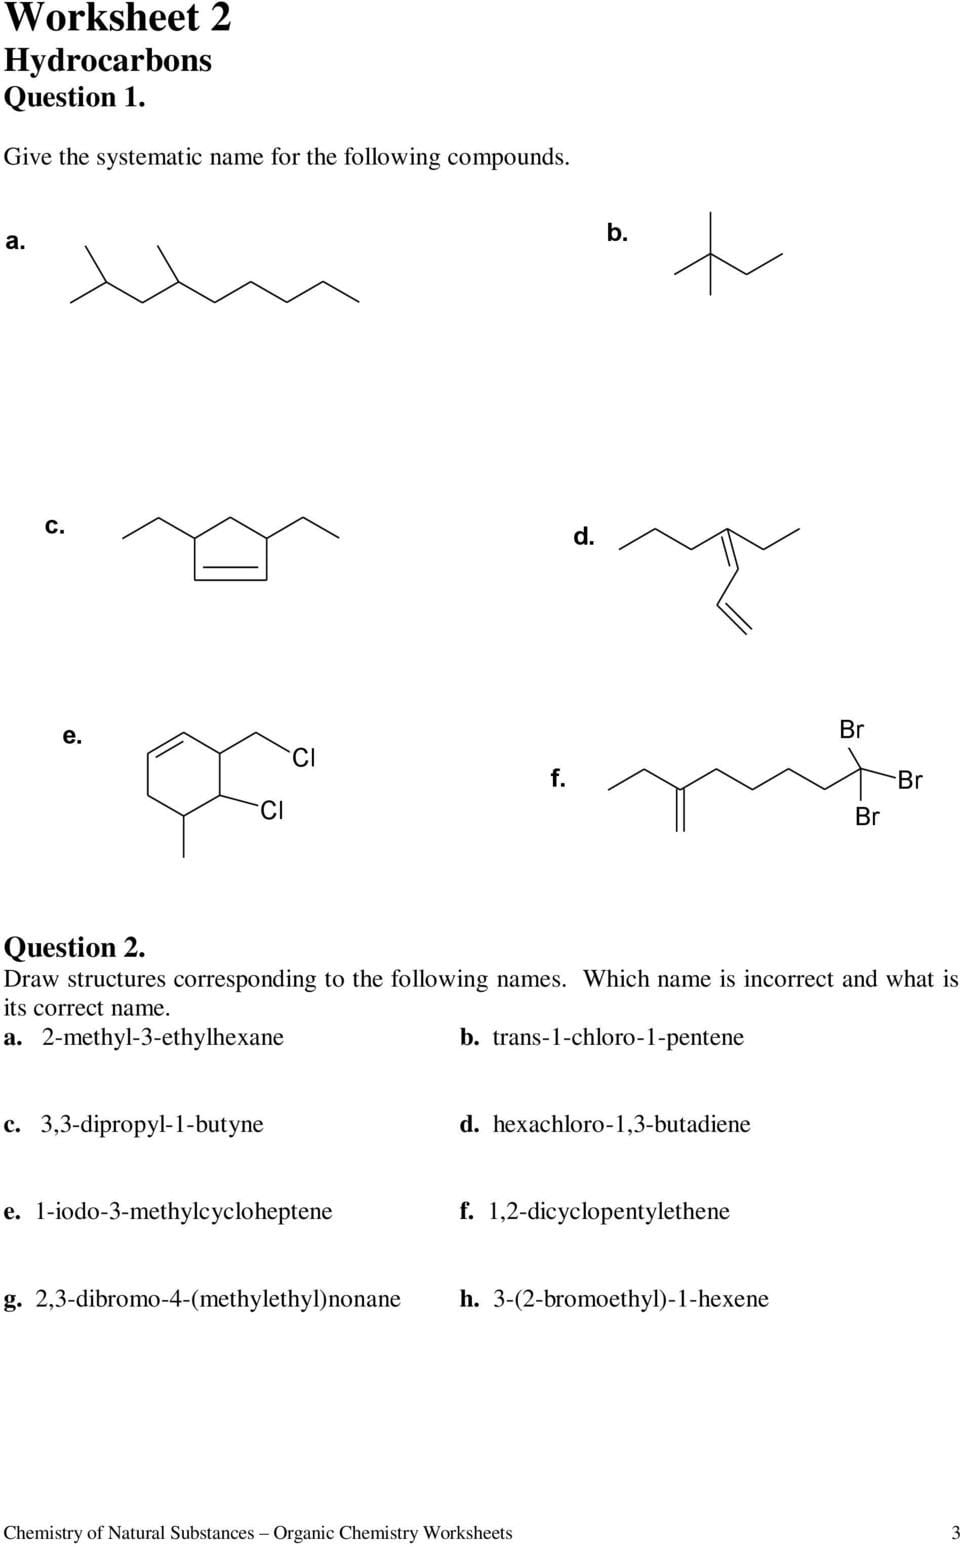 Worksheets For Organic Chemistry  Pdf Pertaining To Organic Chemistry Worksheet With Answers